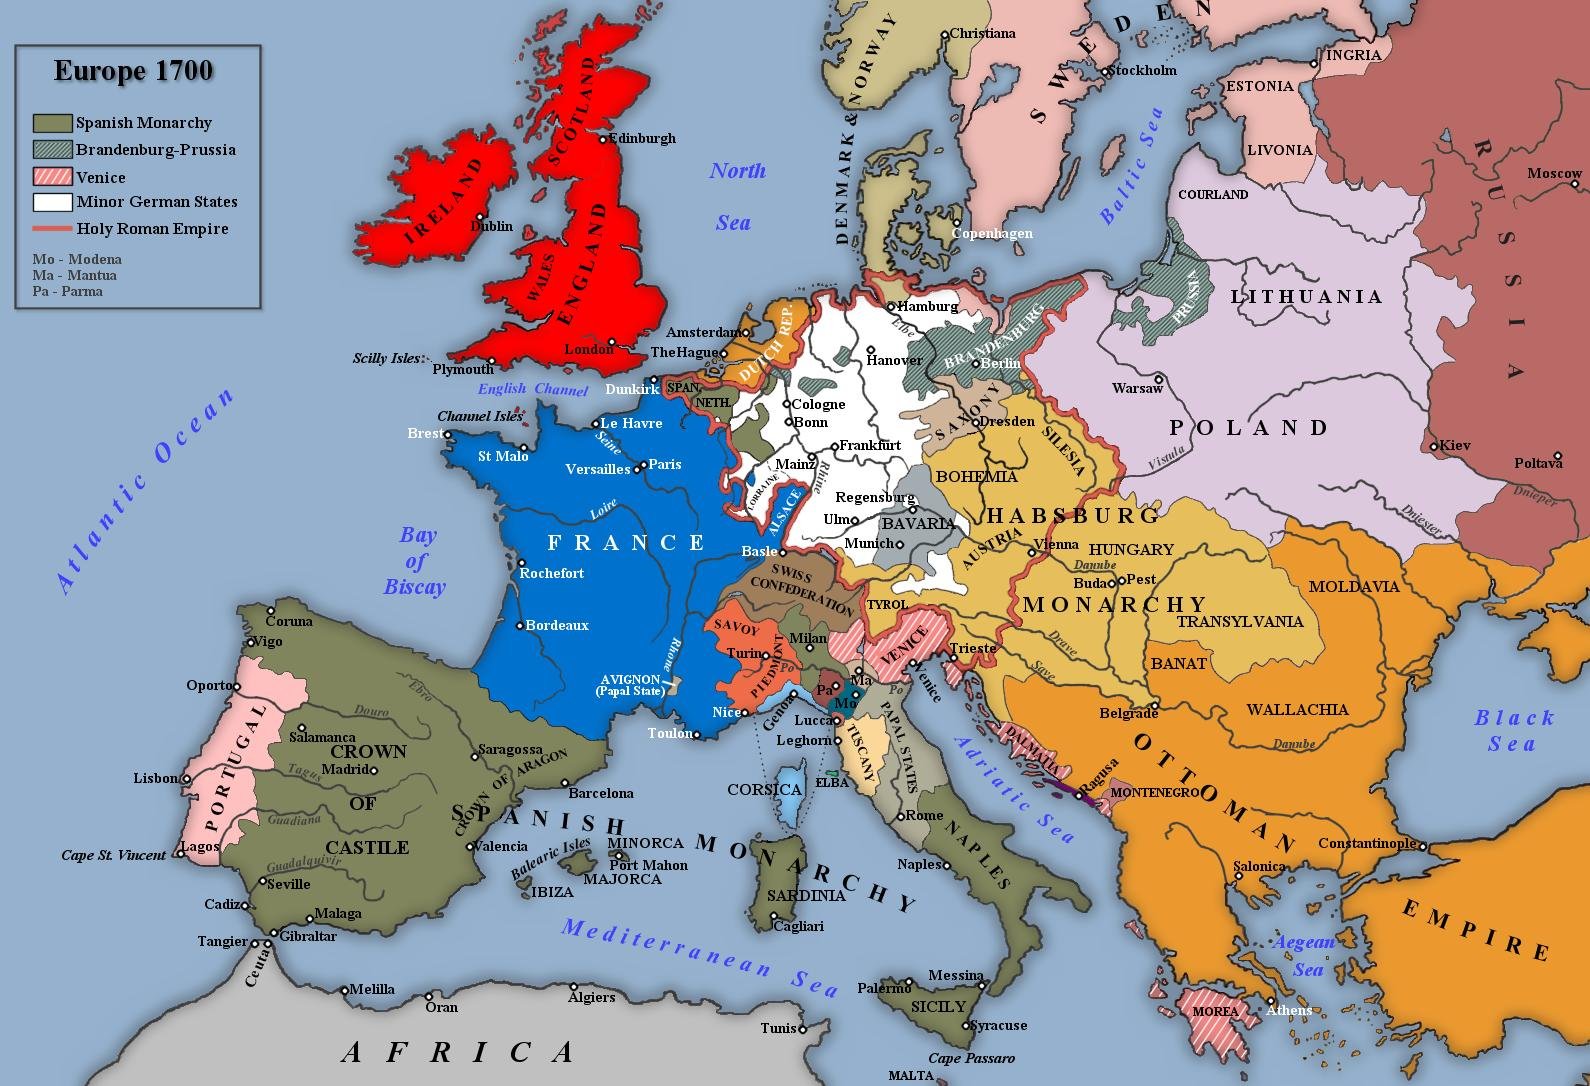 Europe 1700